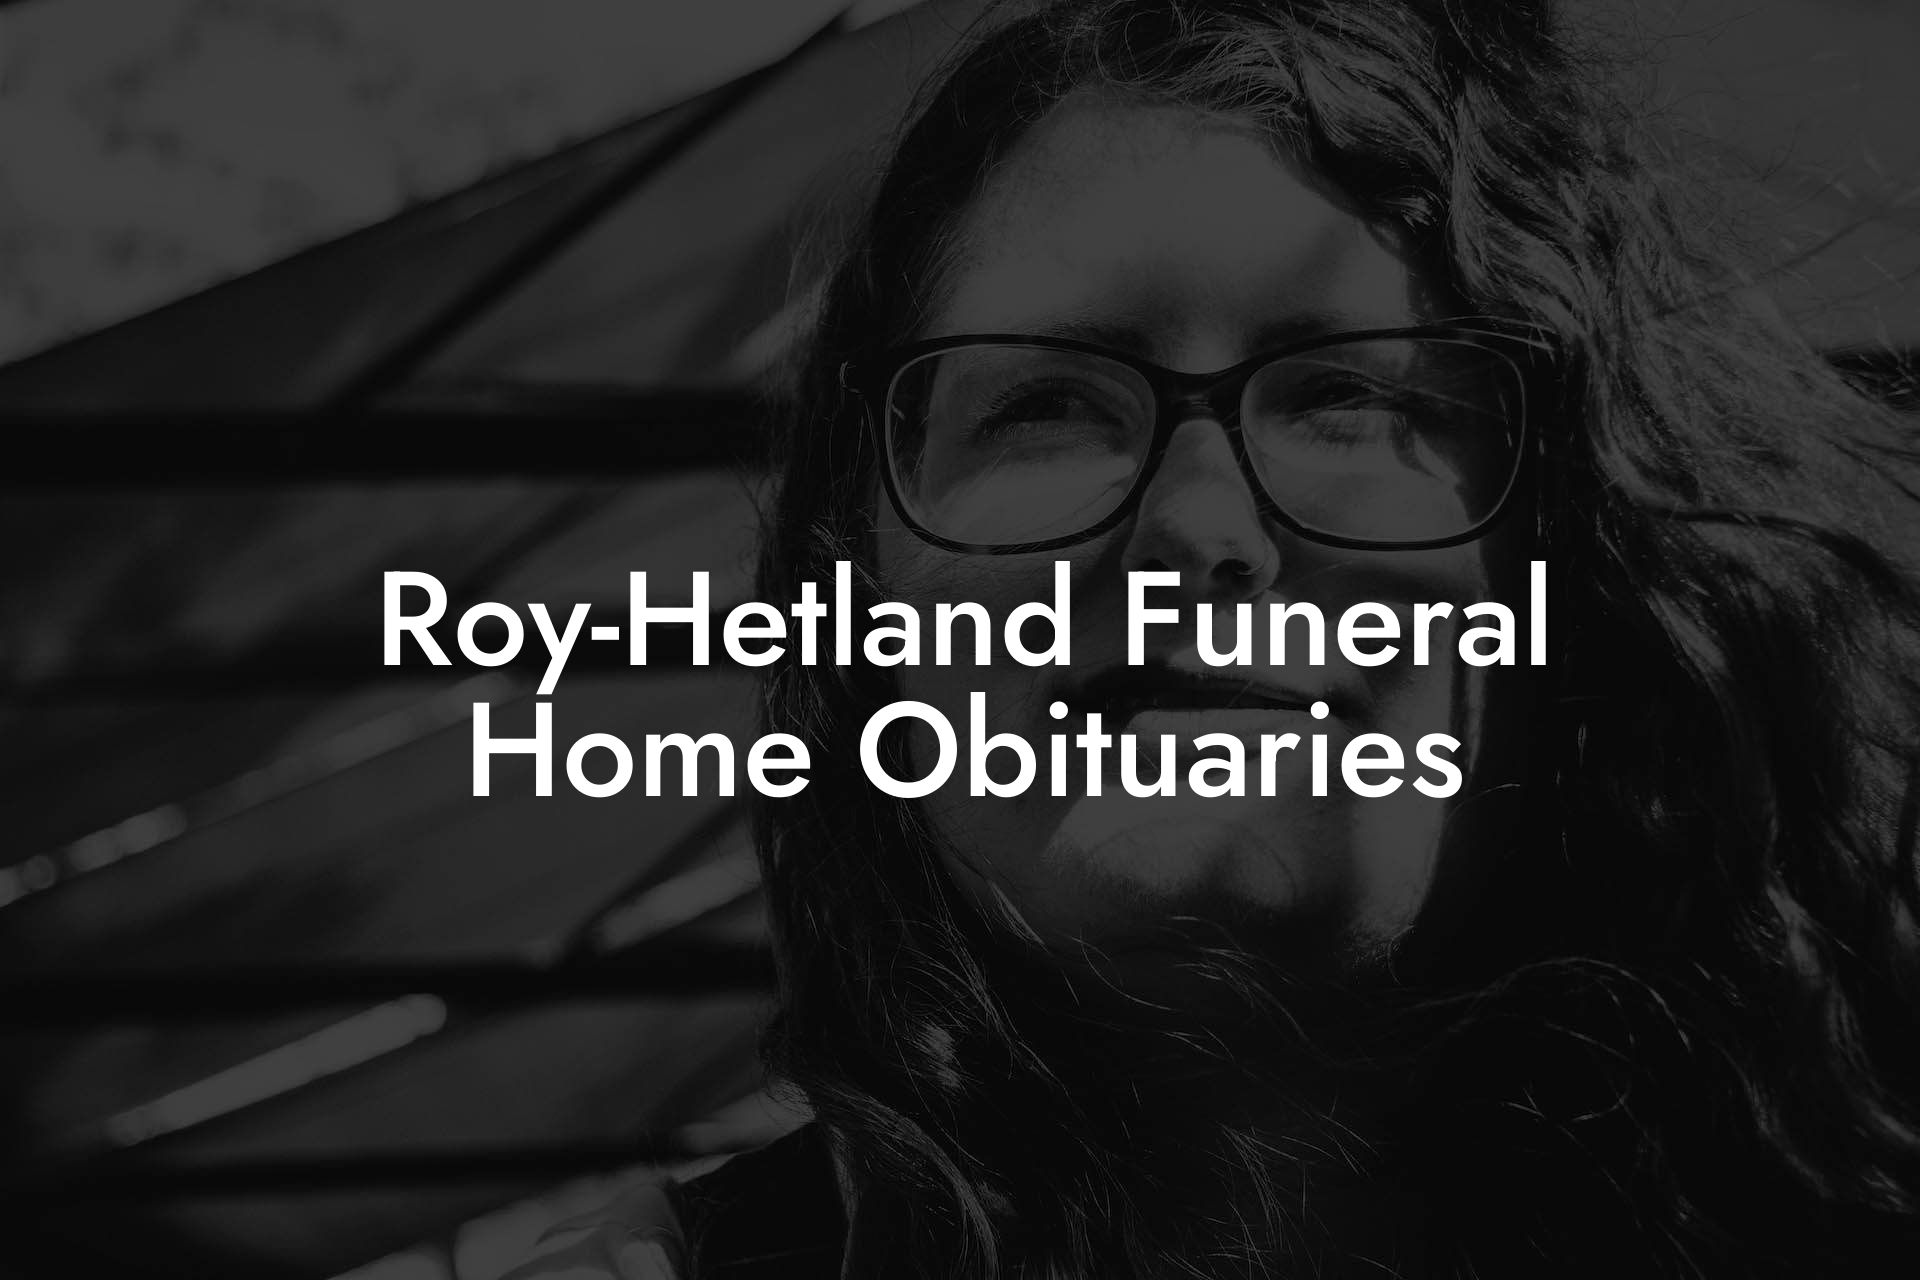 Roy-Hetland Funeral Home Obituaries